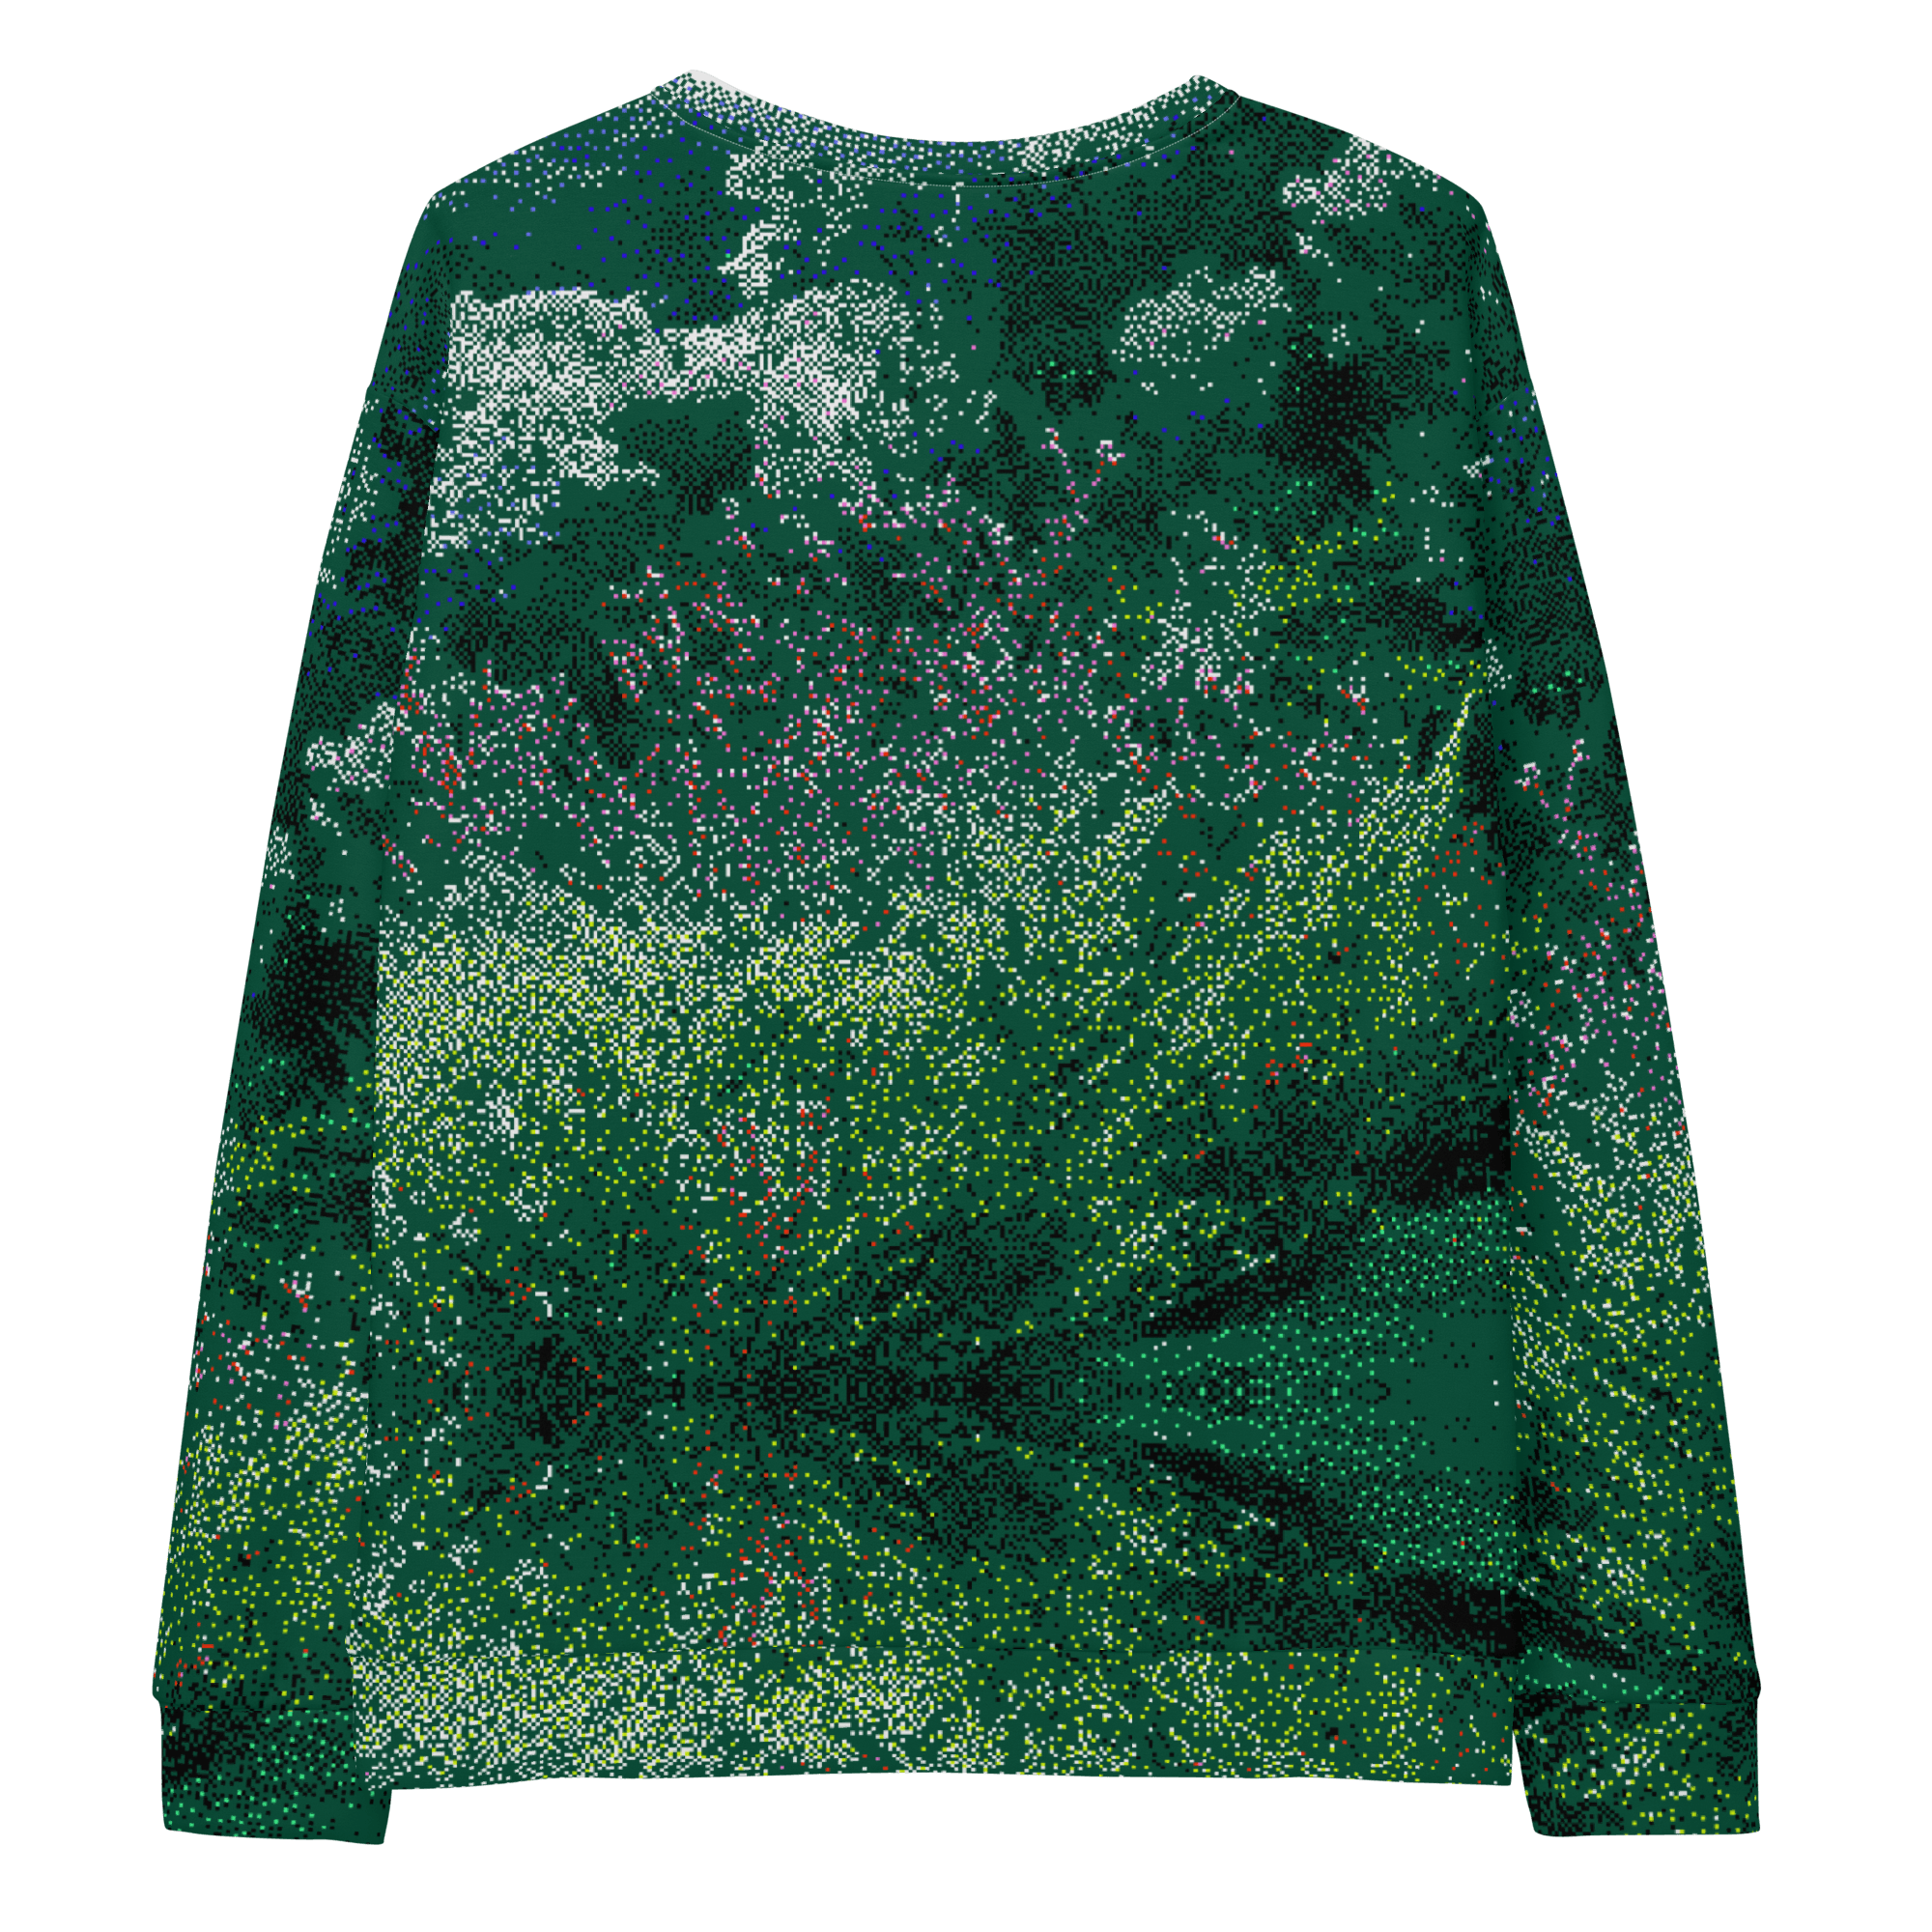 green グリーン® Unisex Sweatshirt (8 pieces for sale) - Kikillo Club